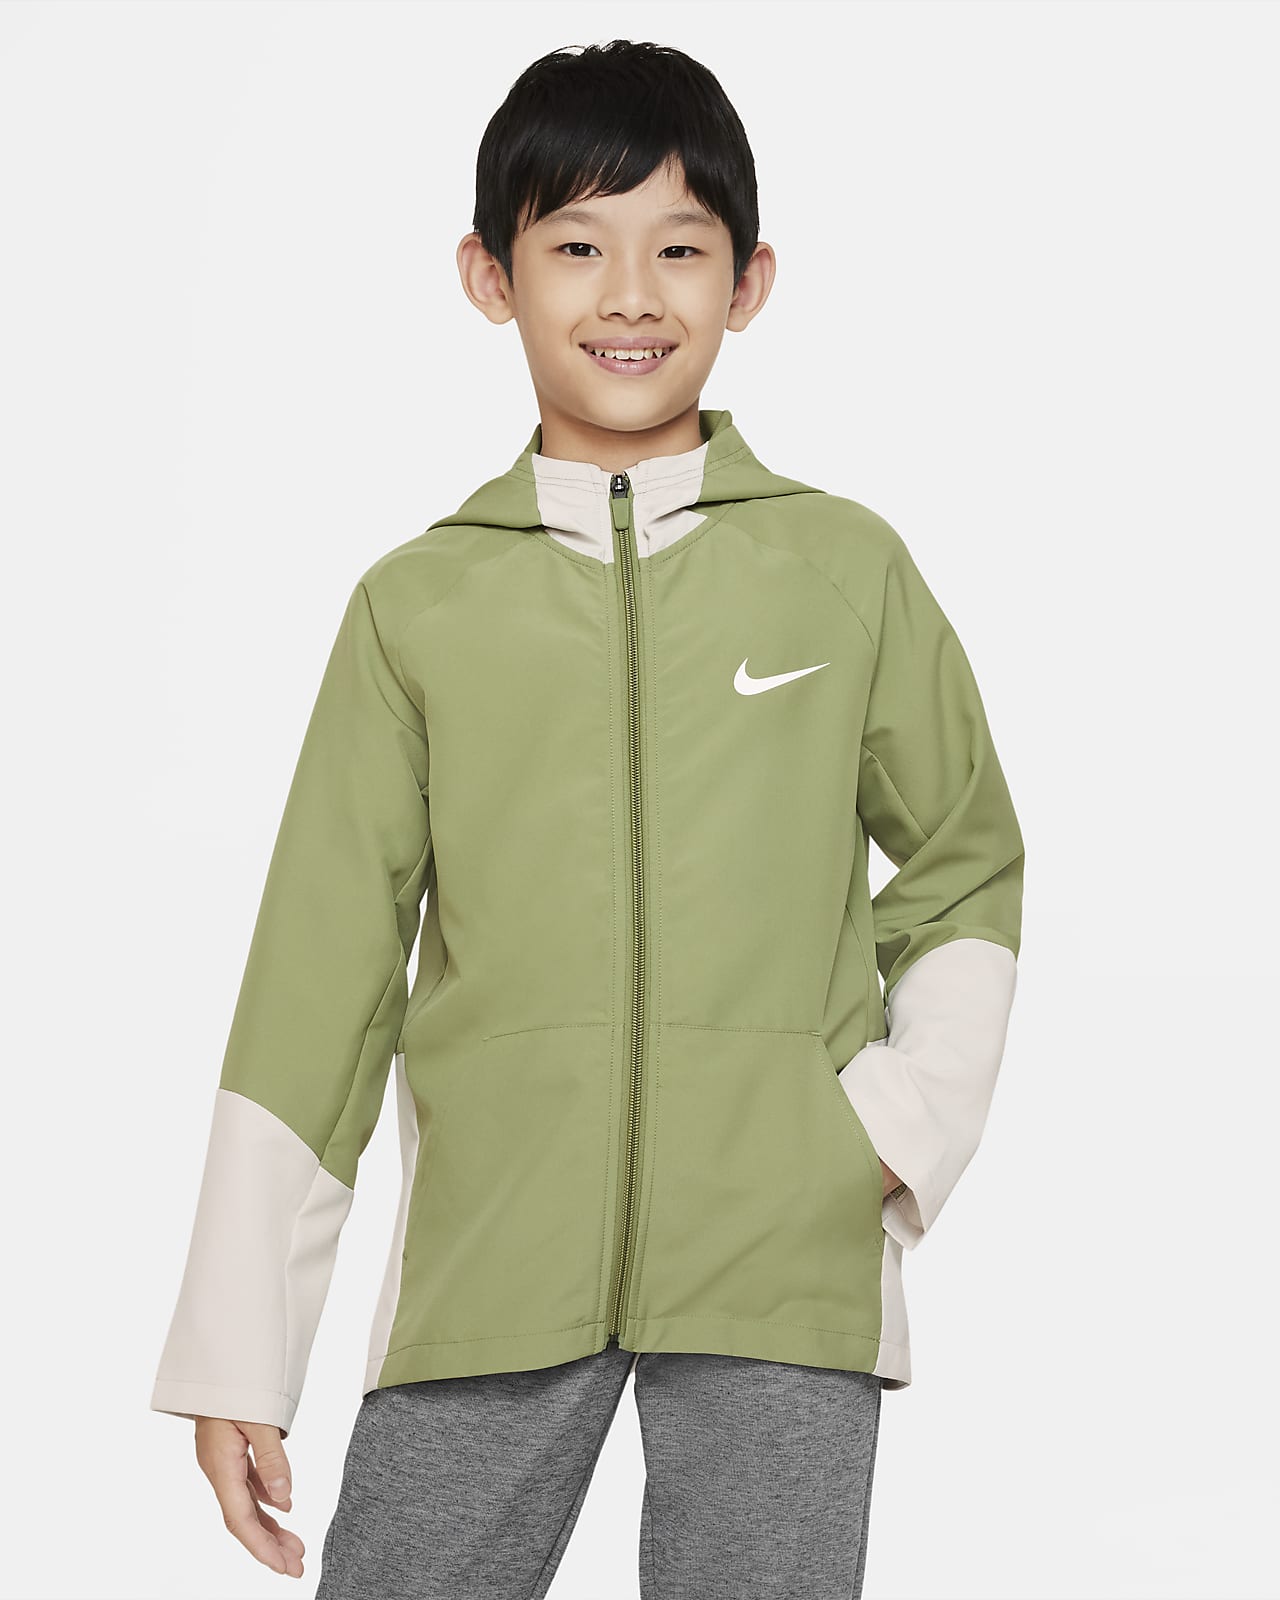 Nike Dri-FIT Big Kids' (Boys') Woven Training Jacket